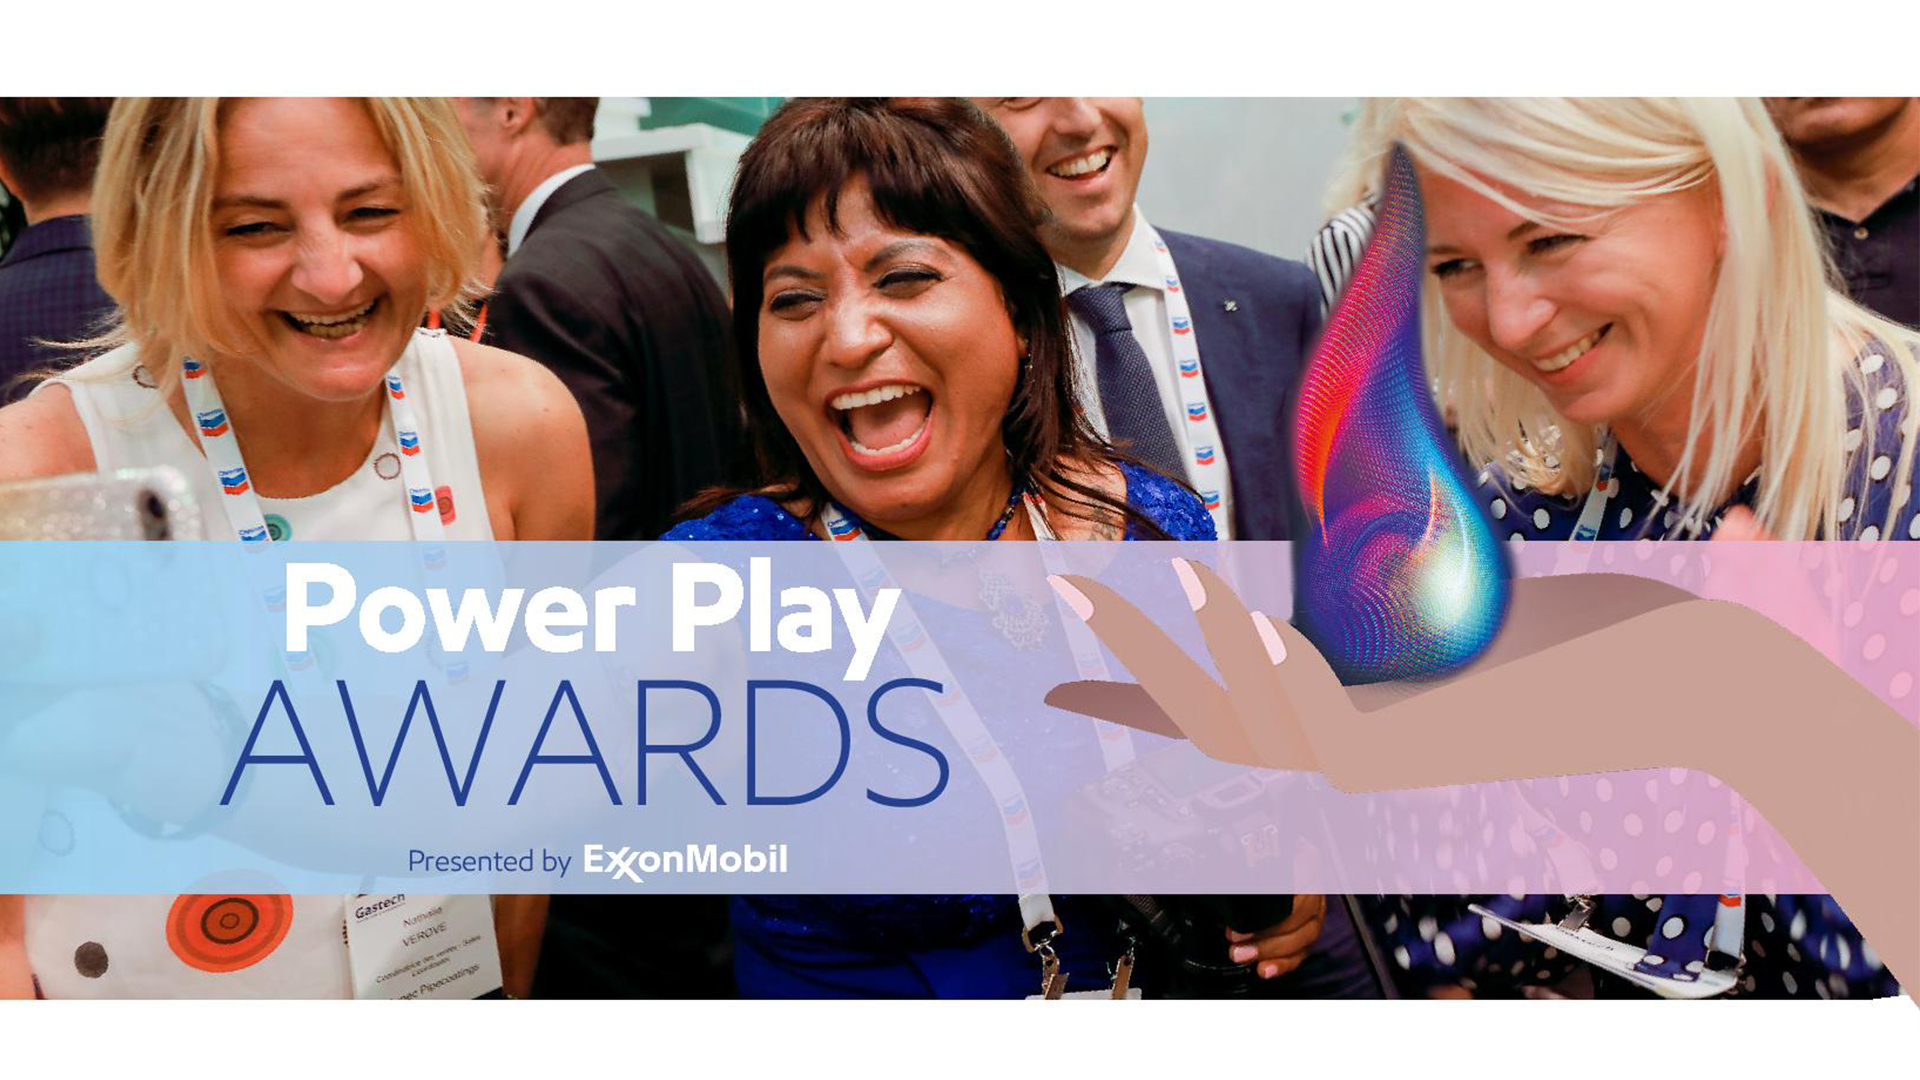 Power Play Awards by ExxonMobil LNG